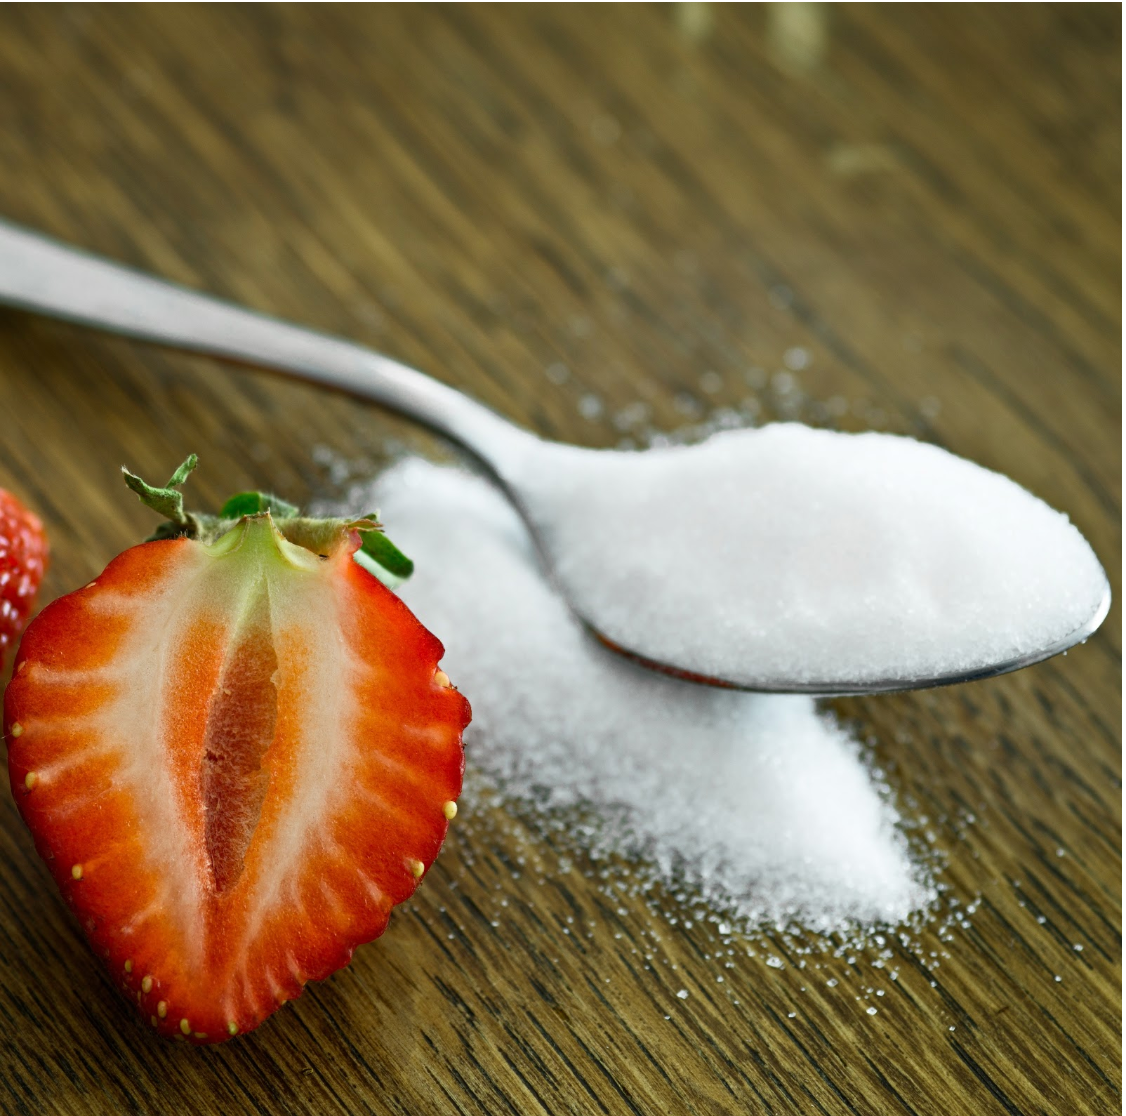 9 Simple Ways to Cut Back On Sugar